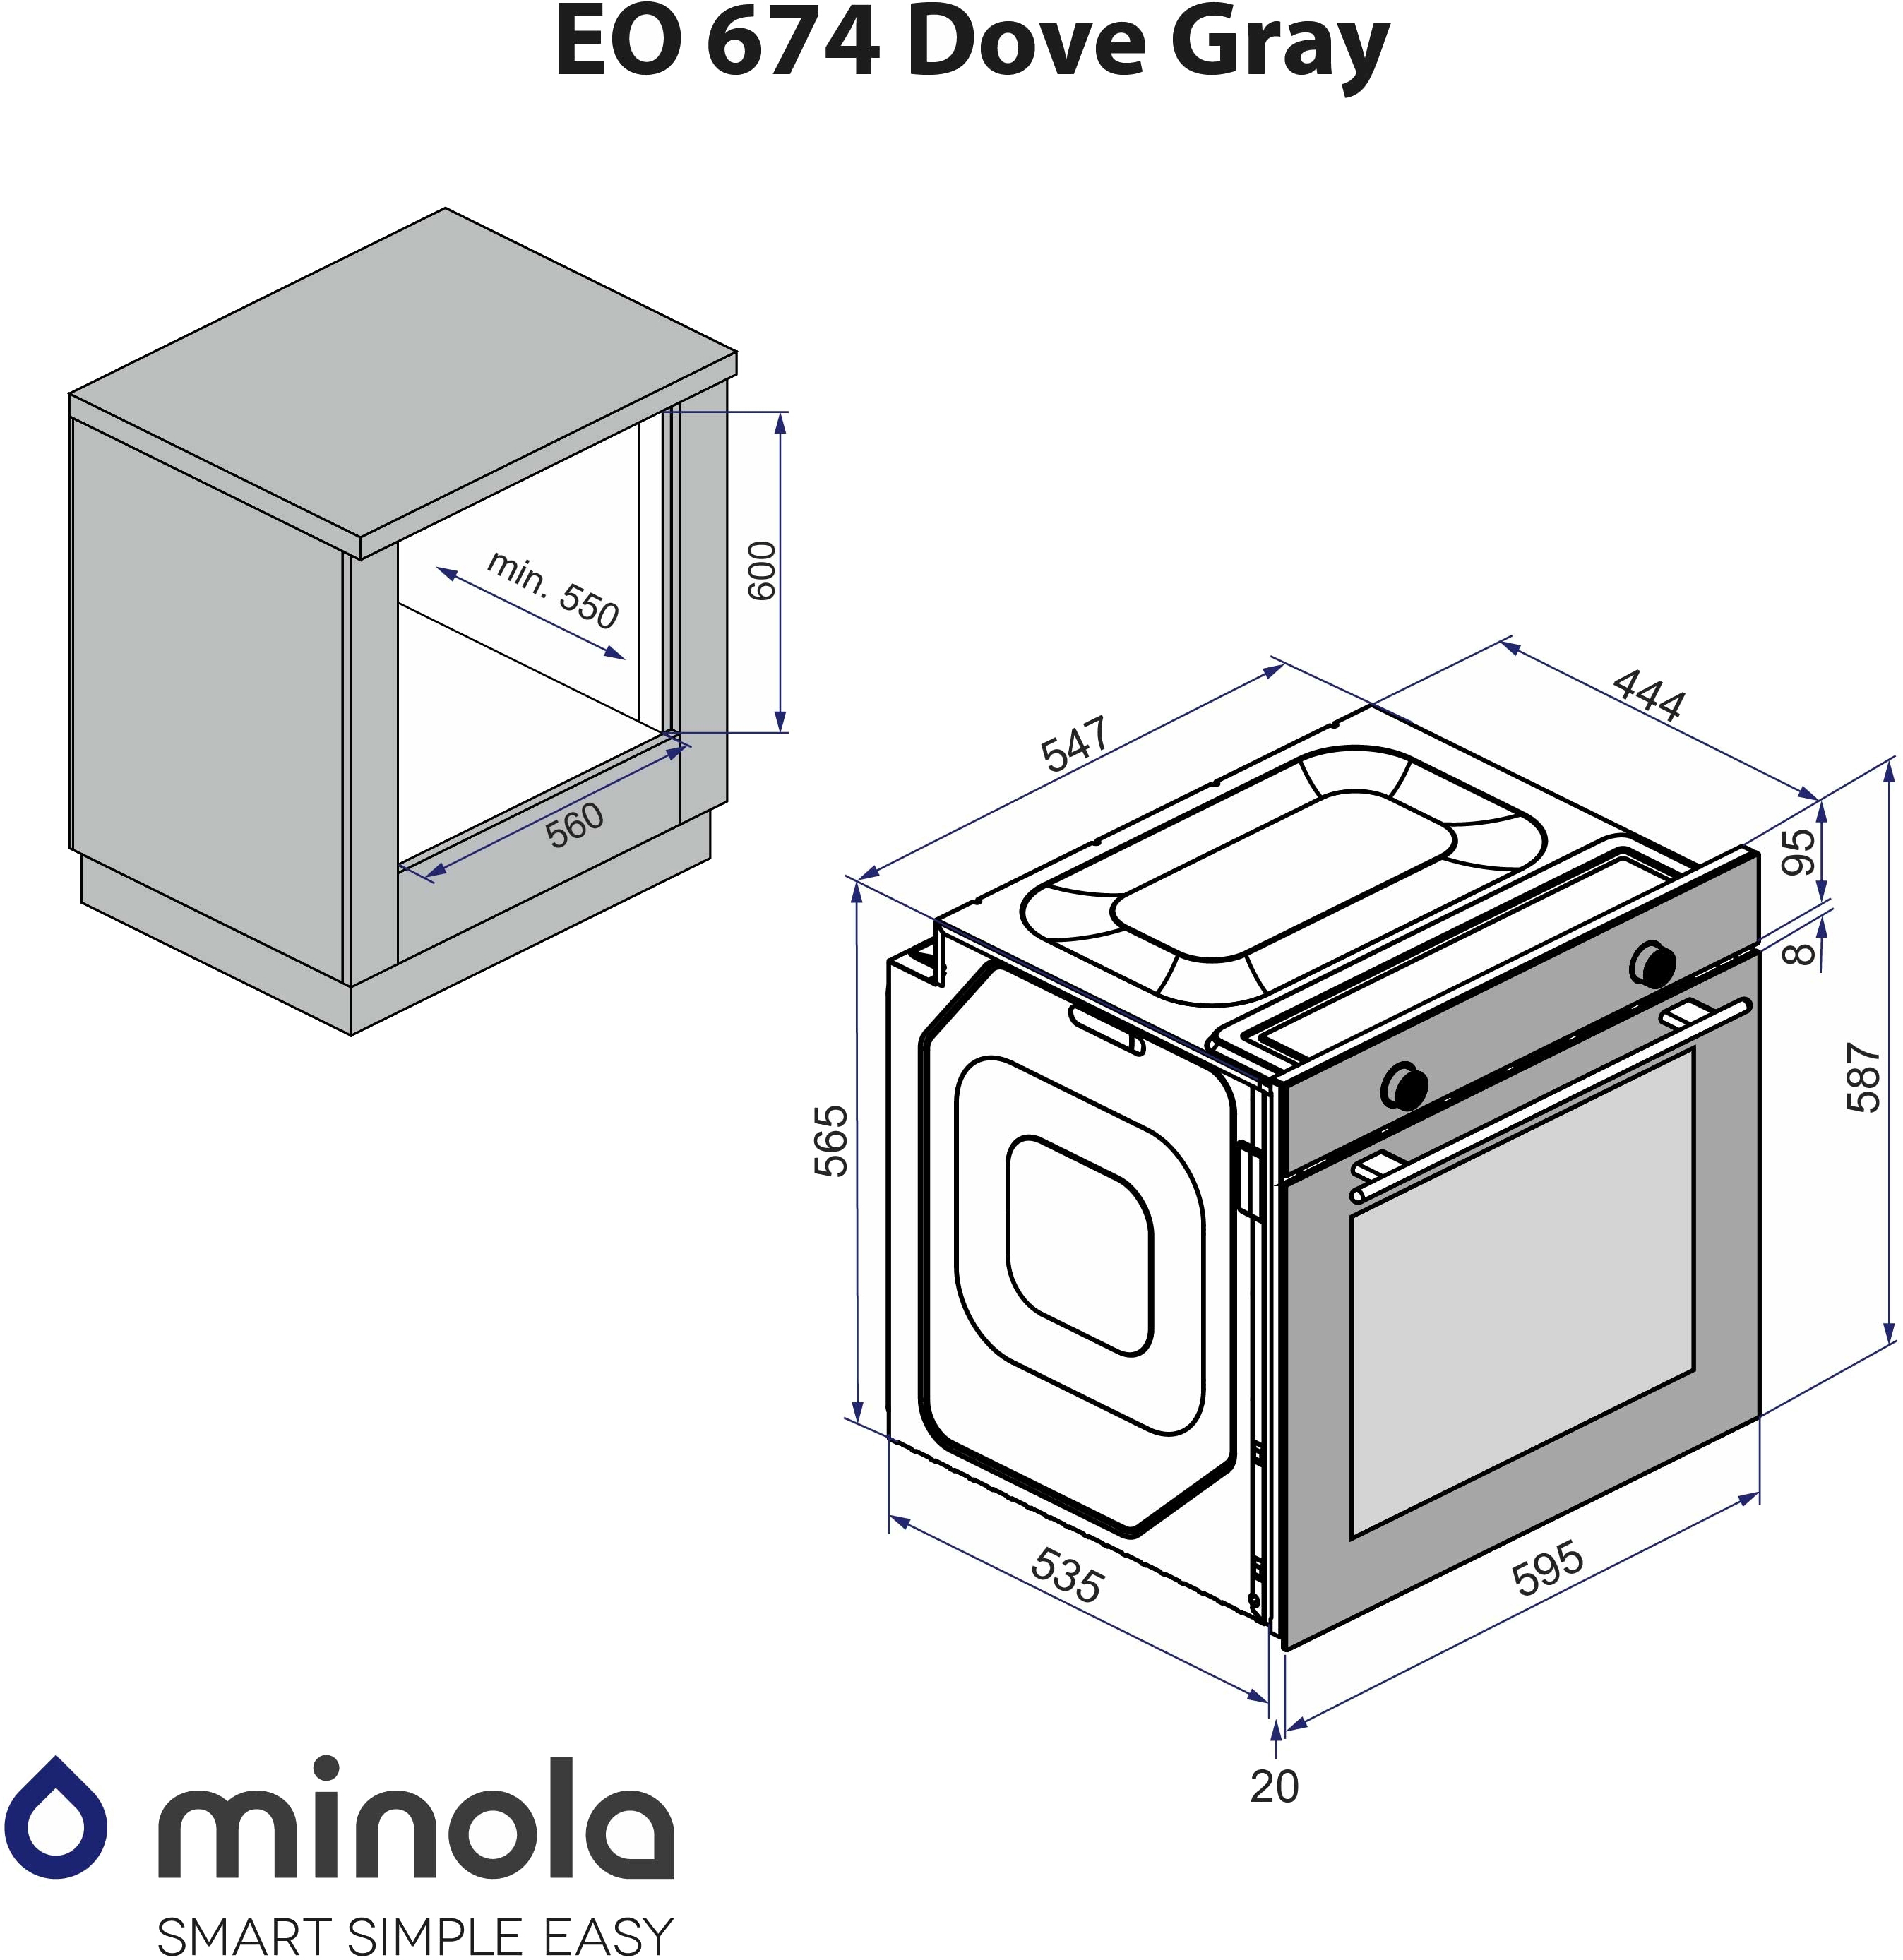 Minola EO 674 Dove Gray Габаритные размеры